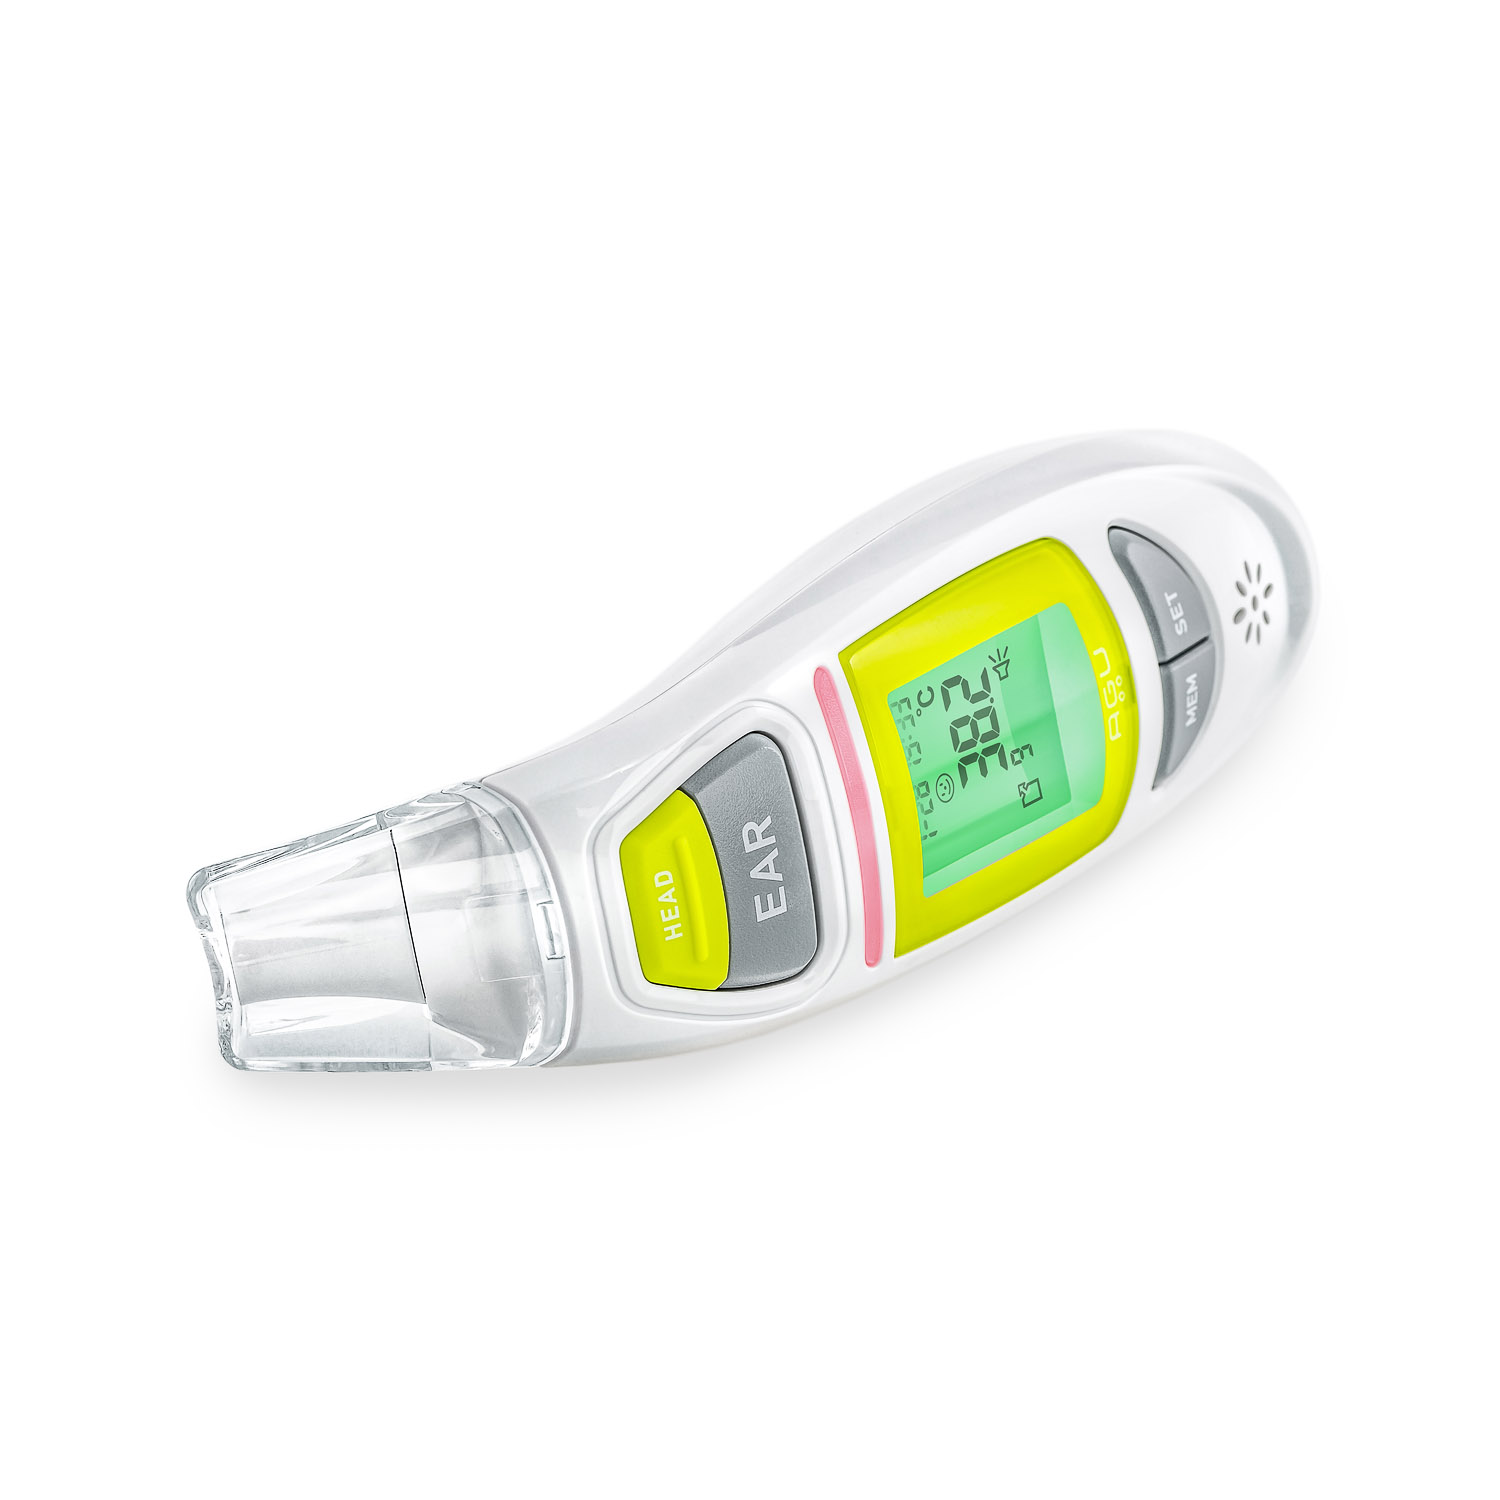 AGU Smart Infrared Thermometer Brainy